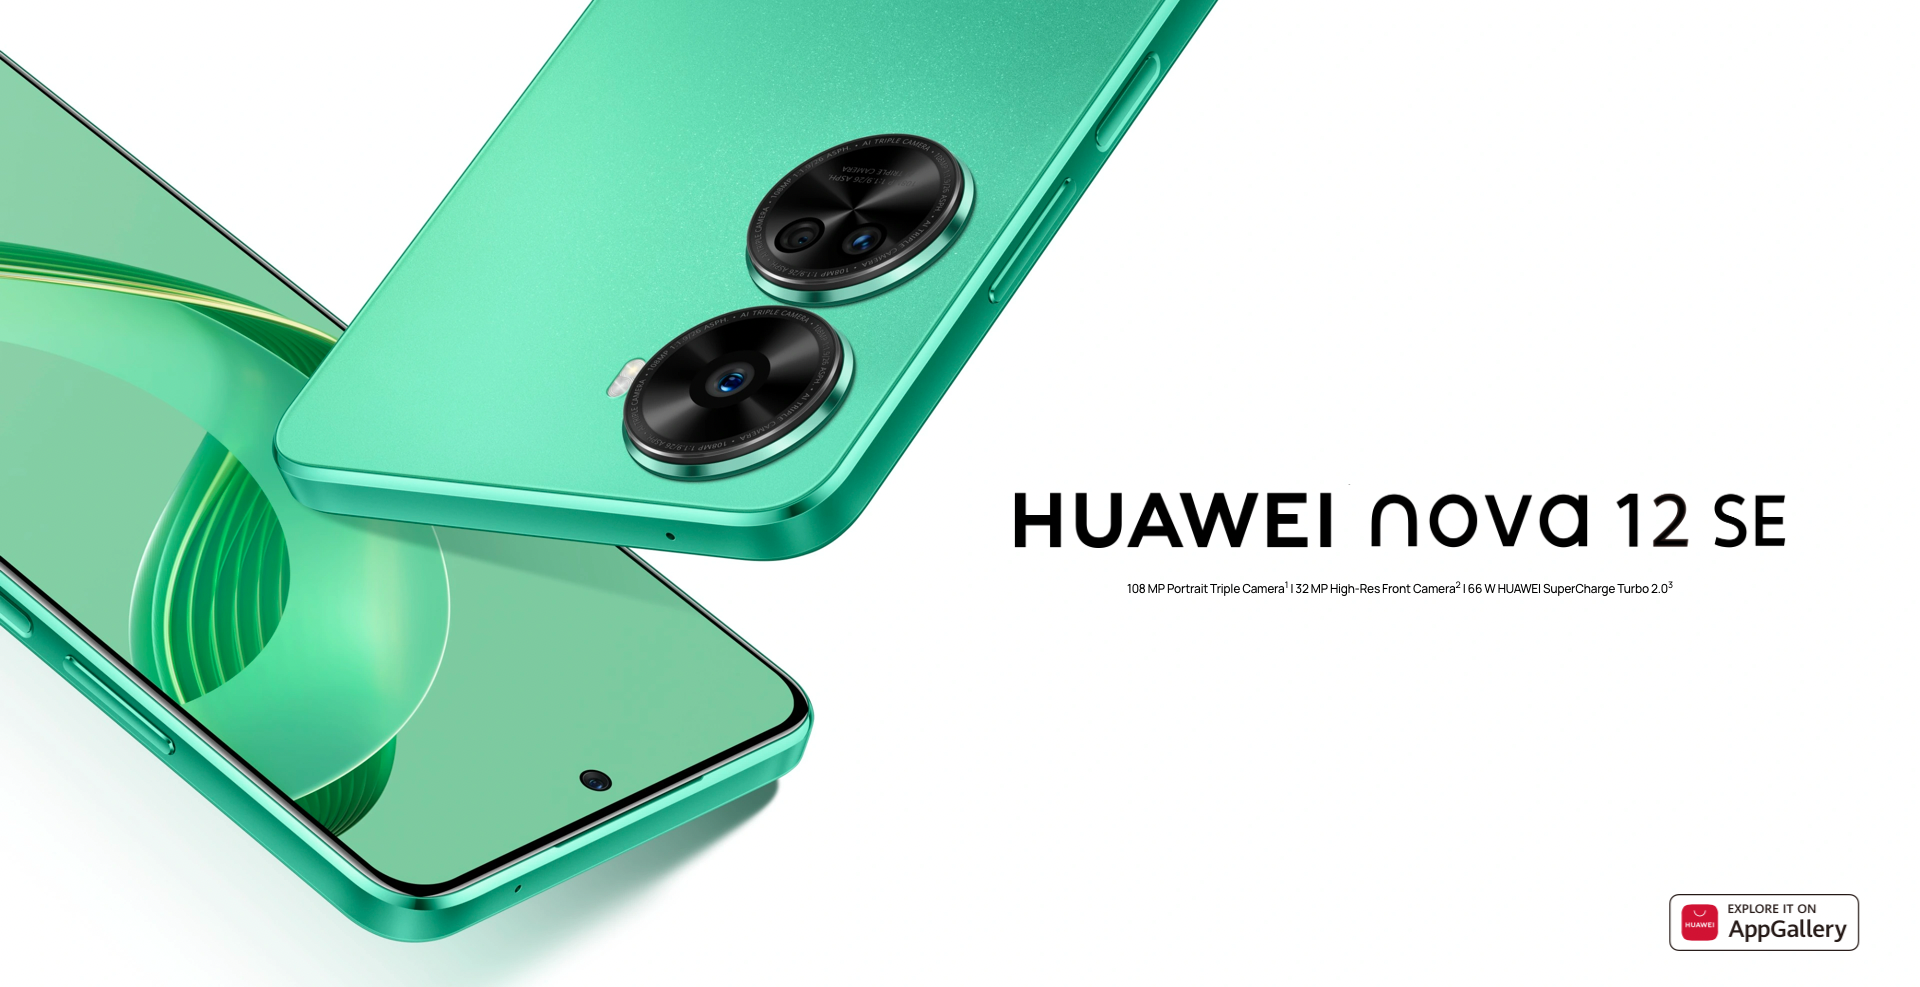 Huawei Nova 12 SE: pantalla OLED, chip Snapdragon 680, cámara de 108 MP y carga de 66W